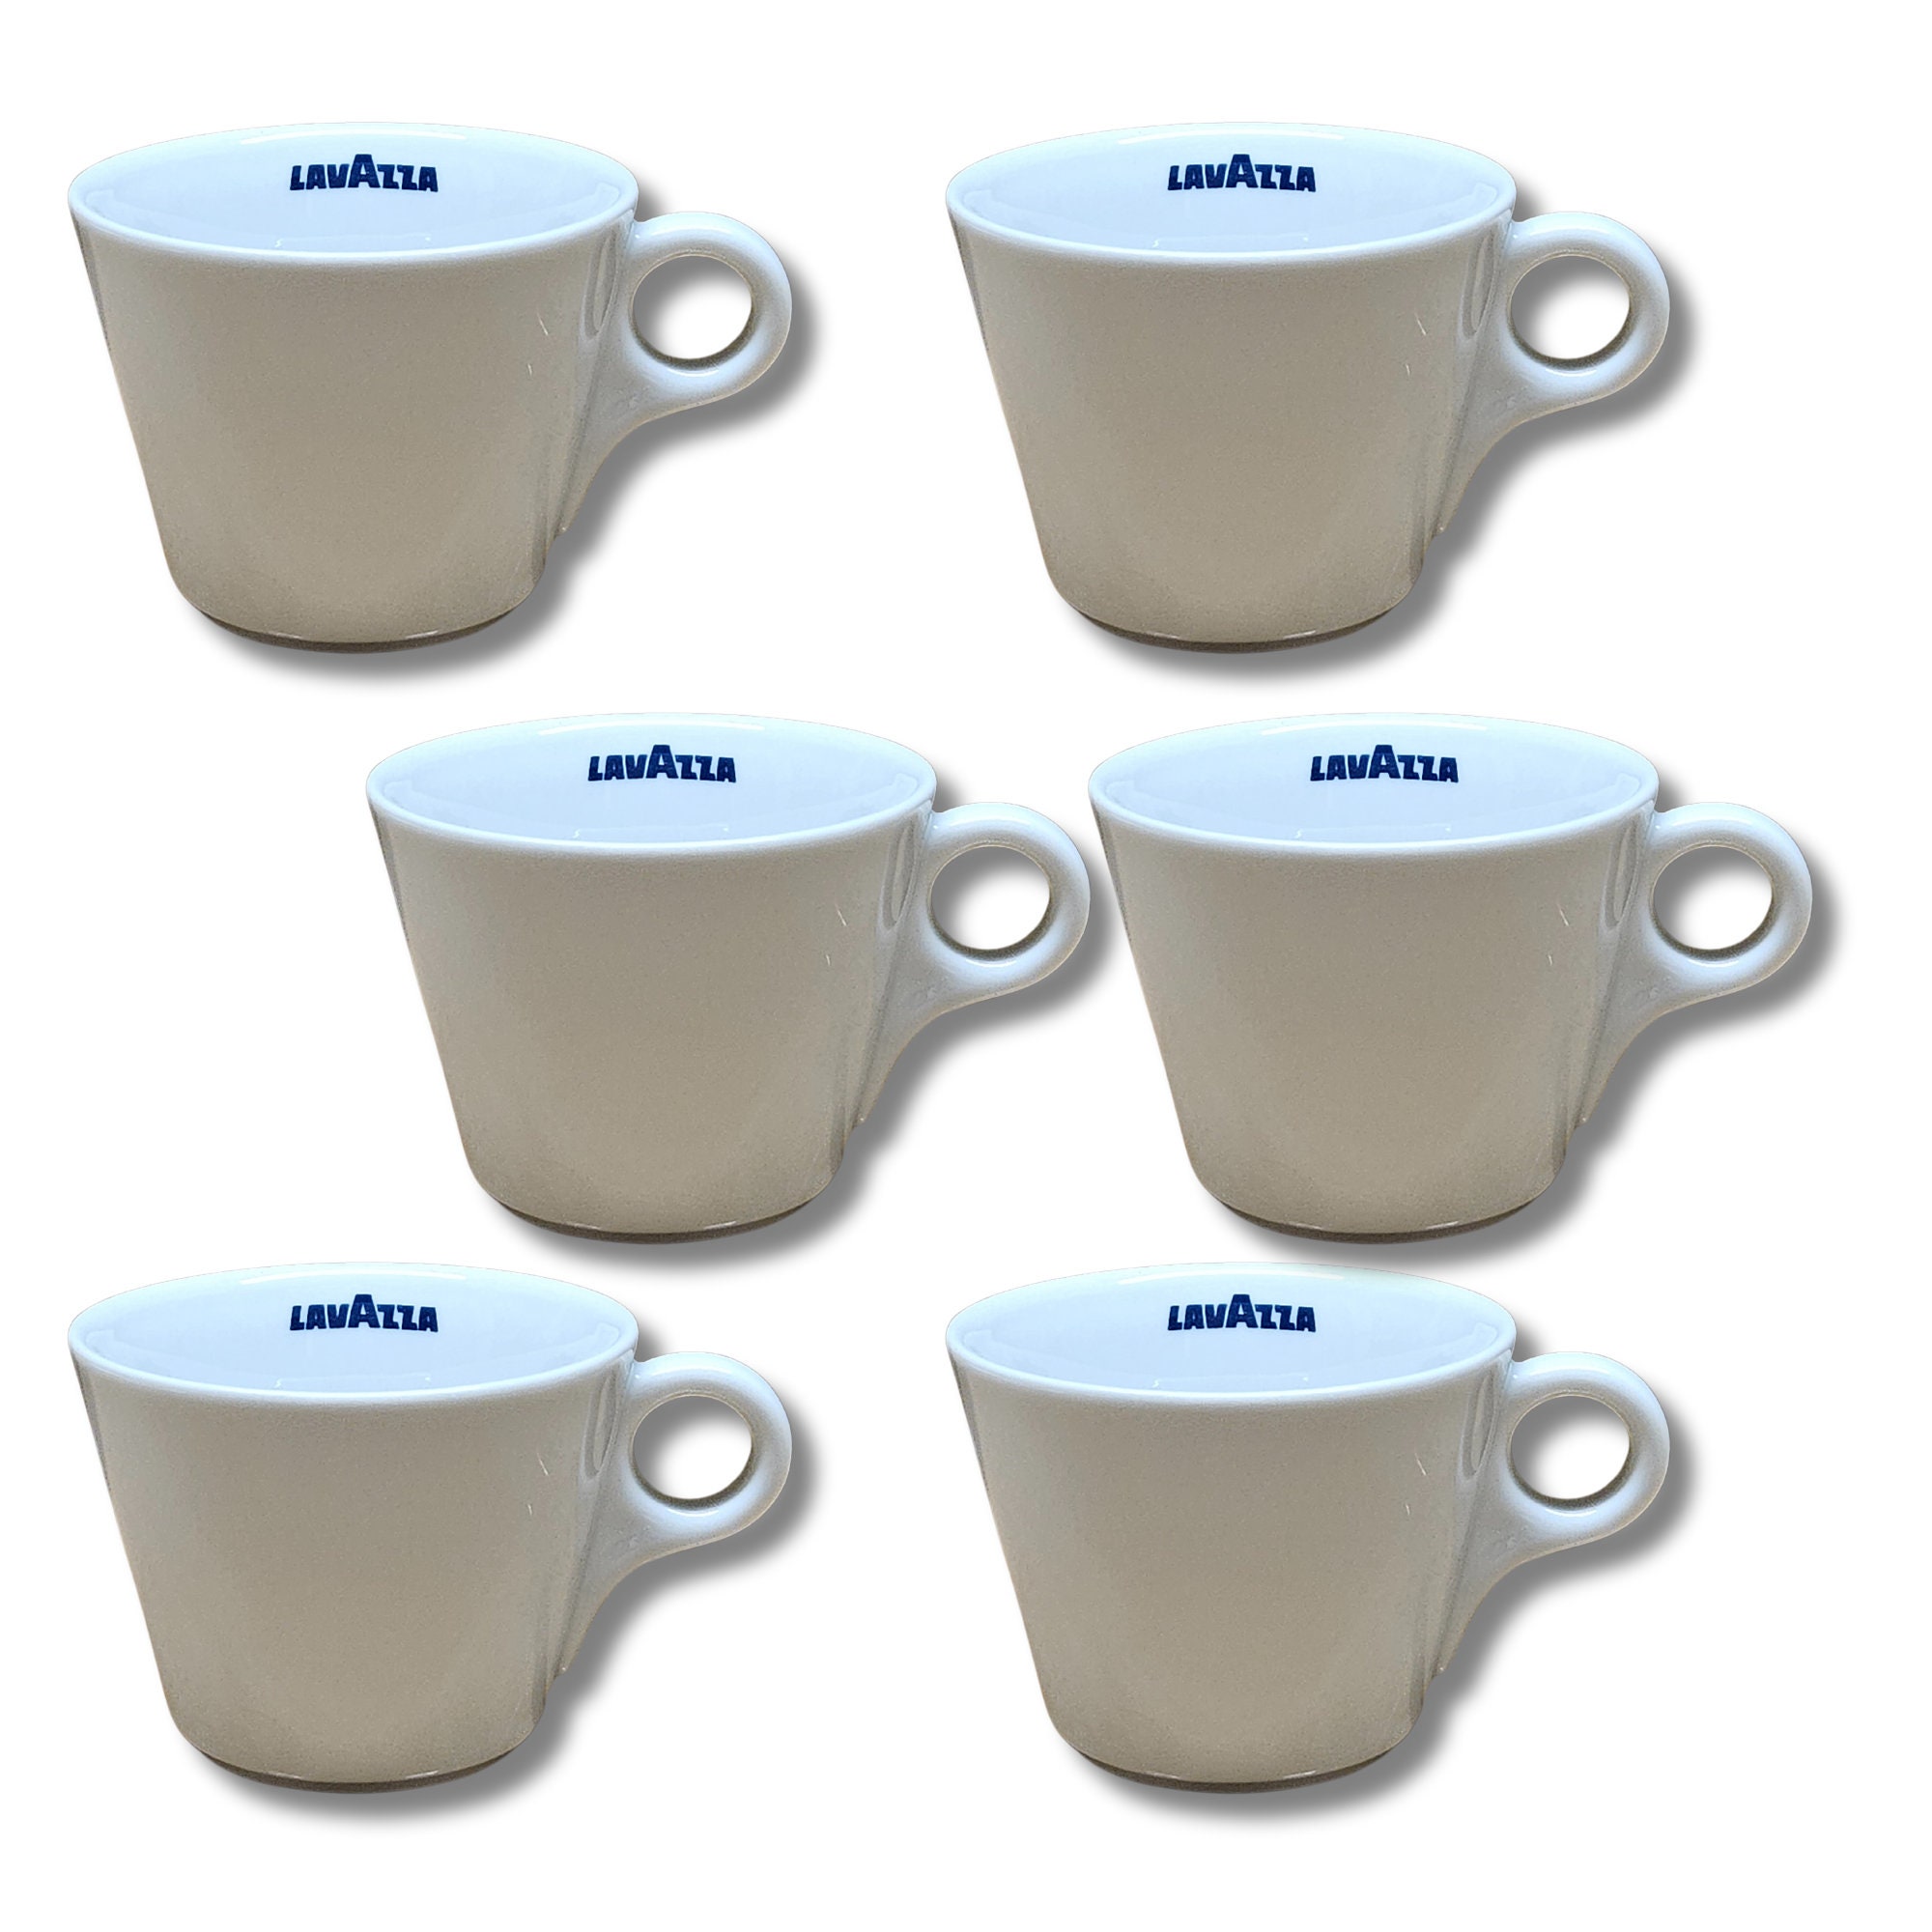 x3 Lavazza Cappuccino Cups Italian Coffee Mug Porcelain CUP Cafe Gift  Americano